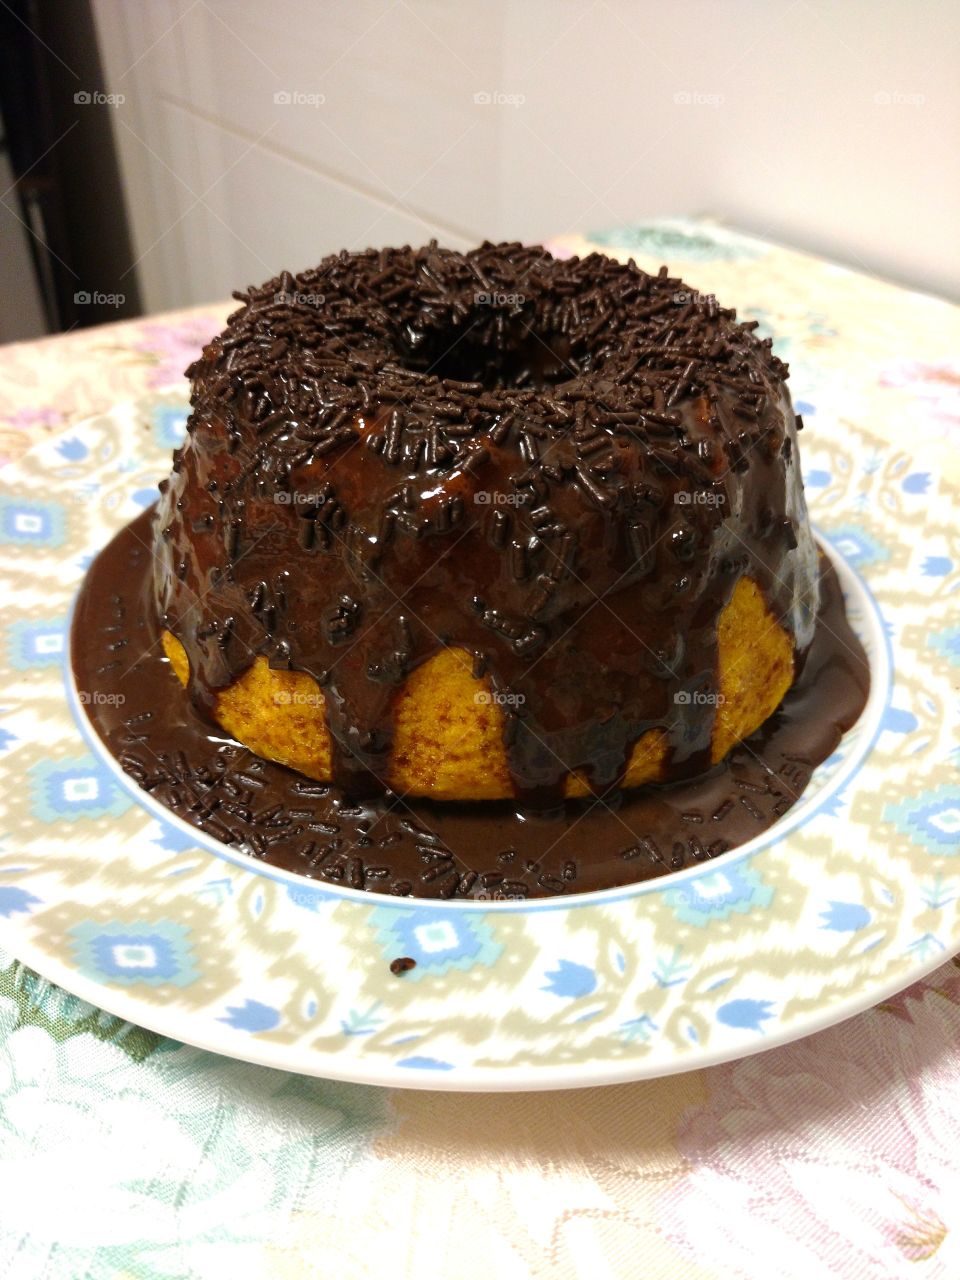 Carot cake with chocolate homemade